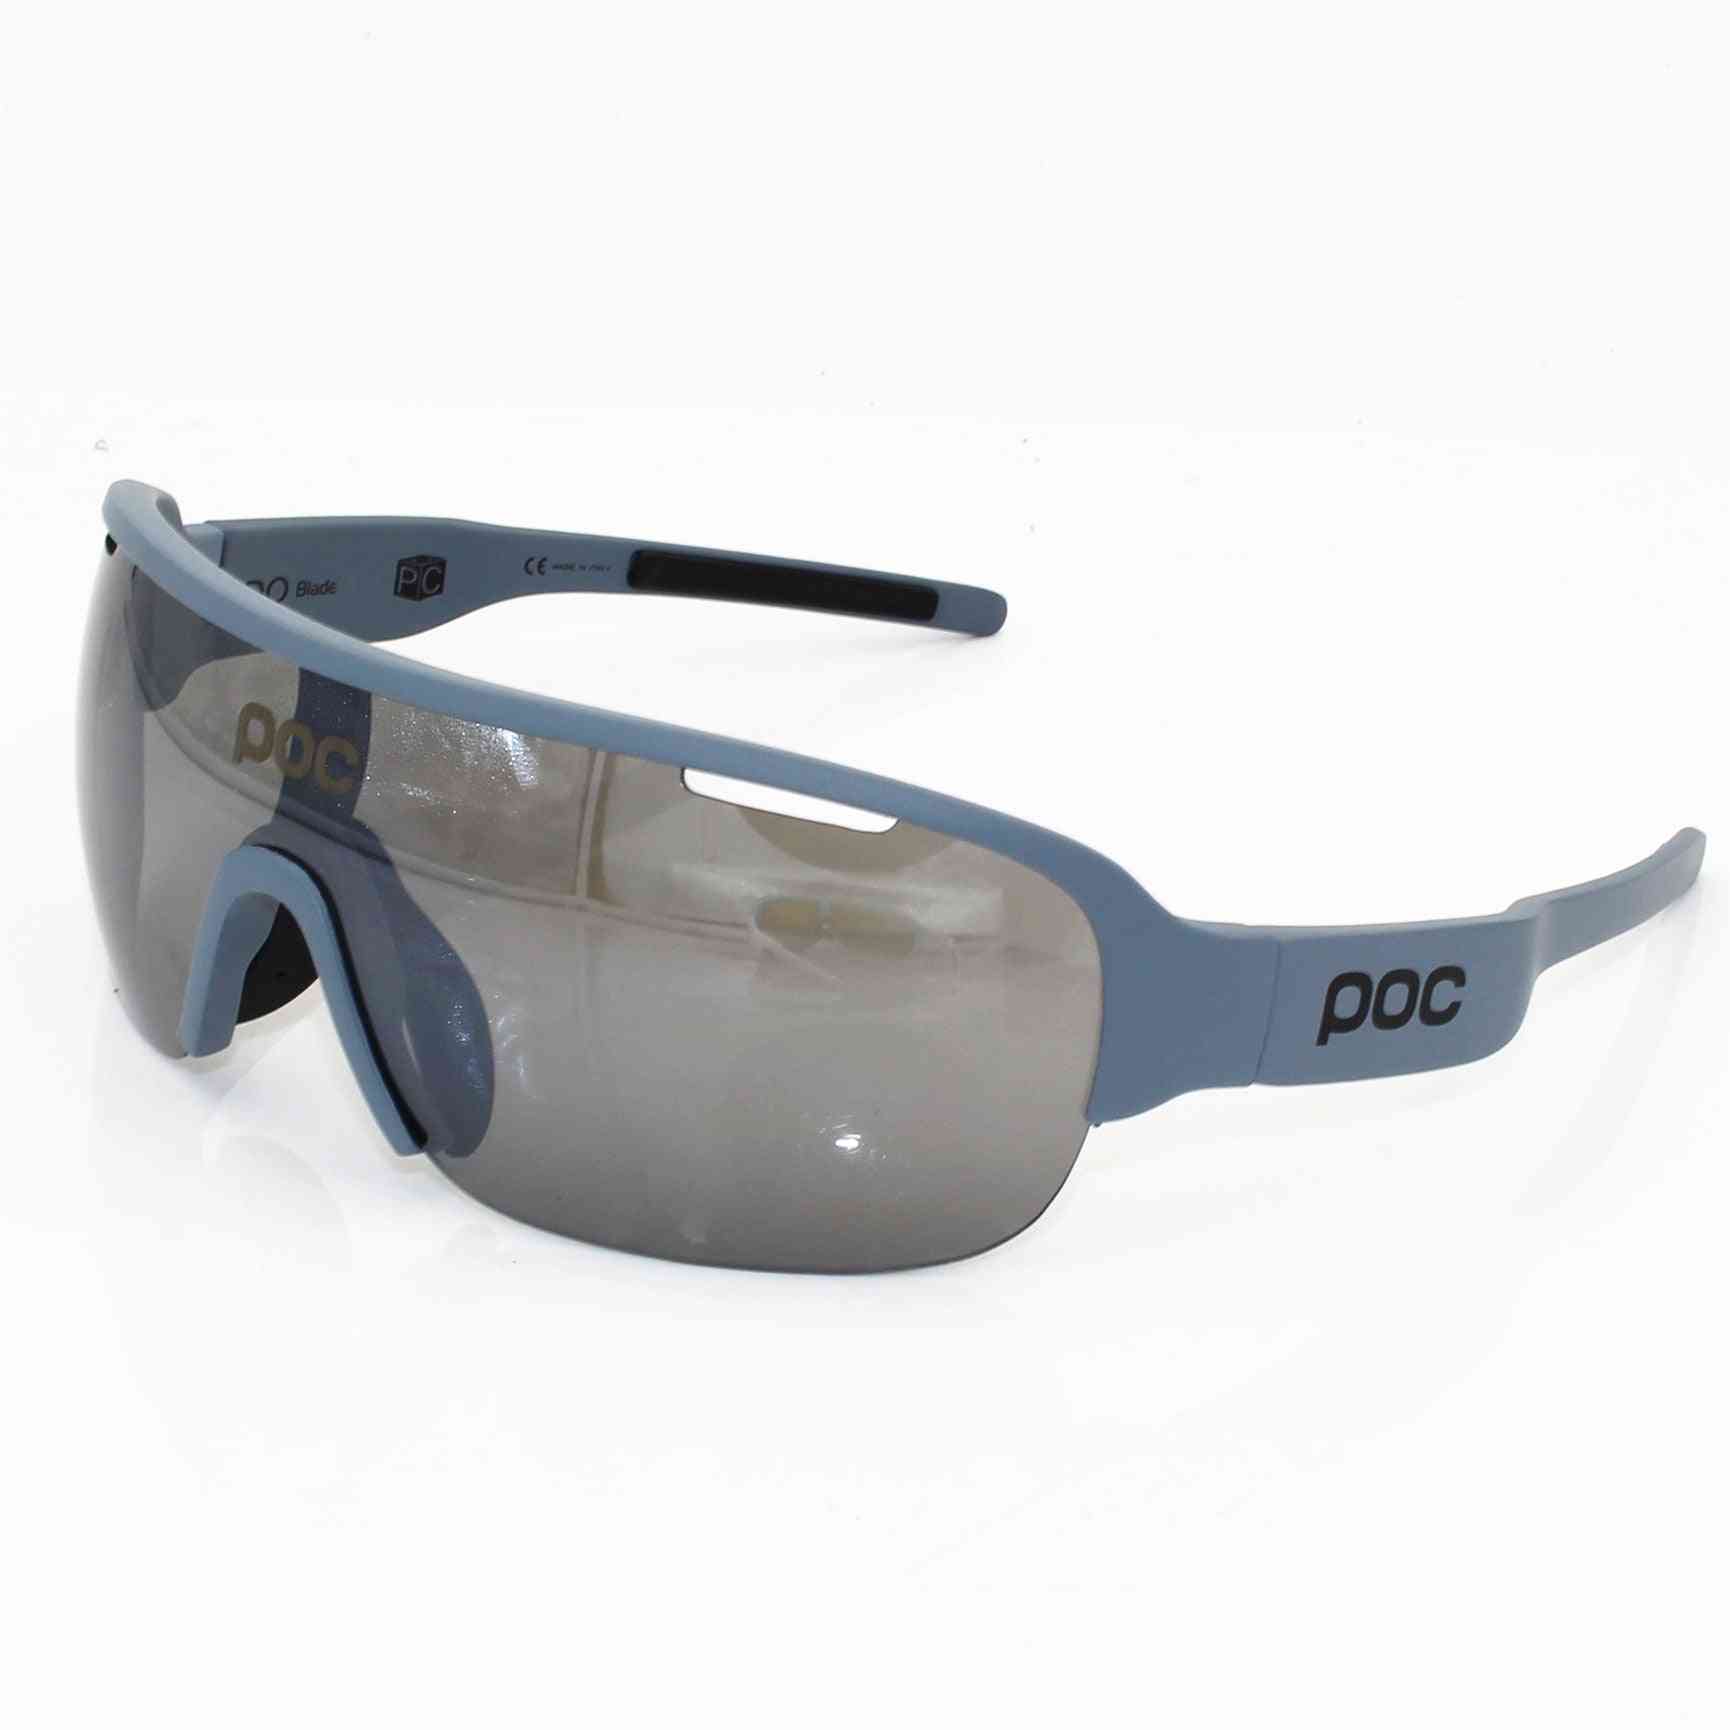 Sunčane naočale za bicikl 3 naočale za sportski cestovni brdski bicikl, naočale